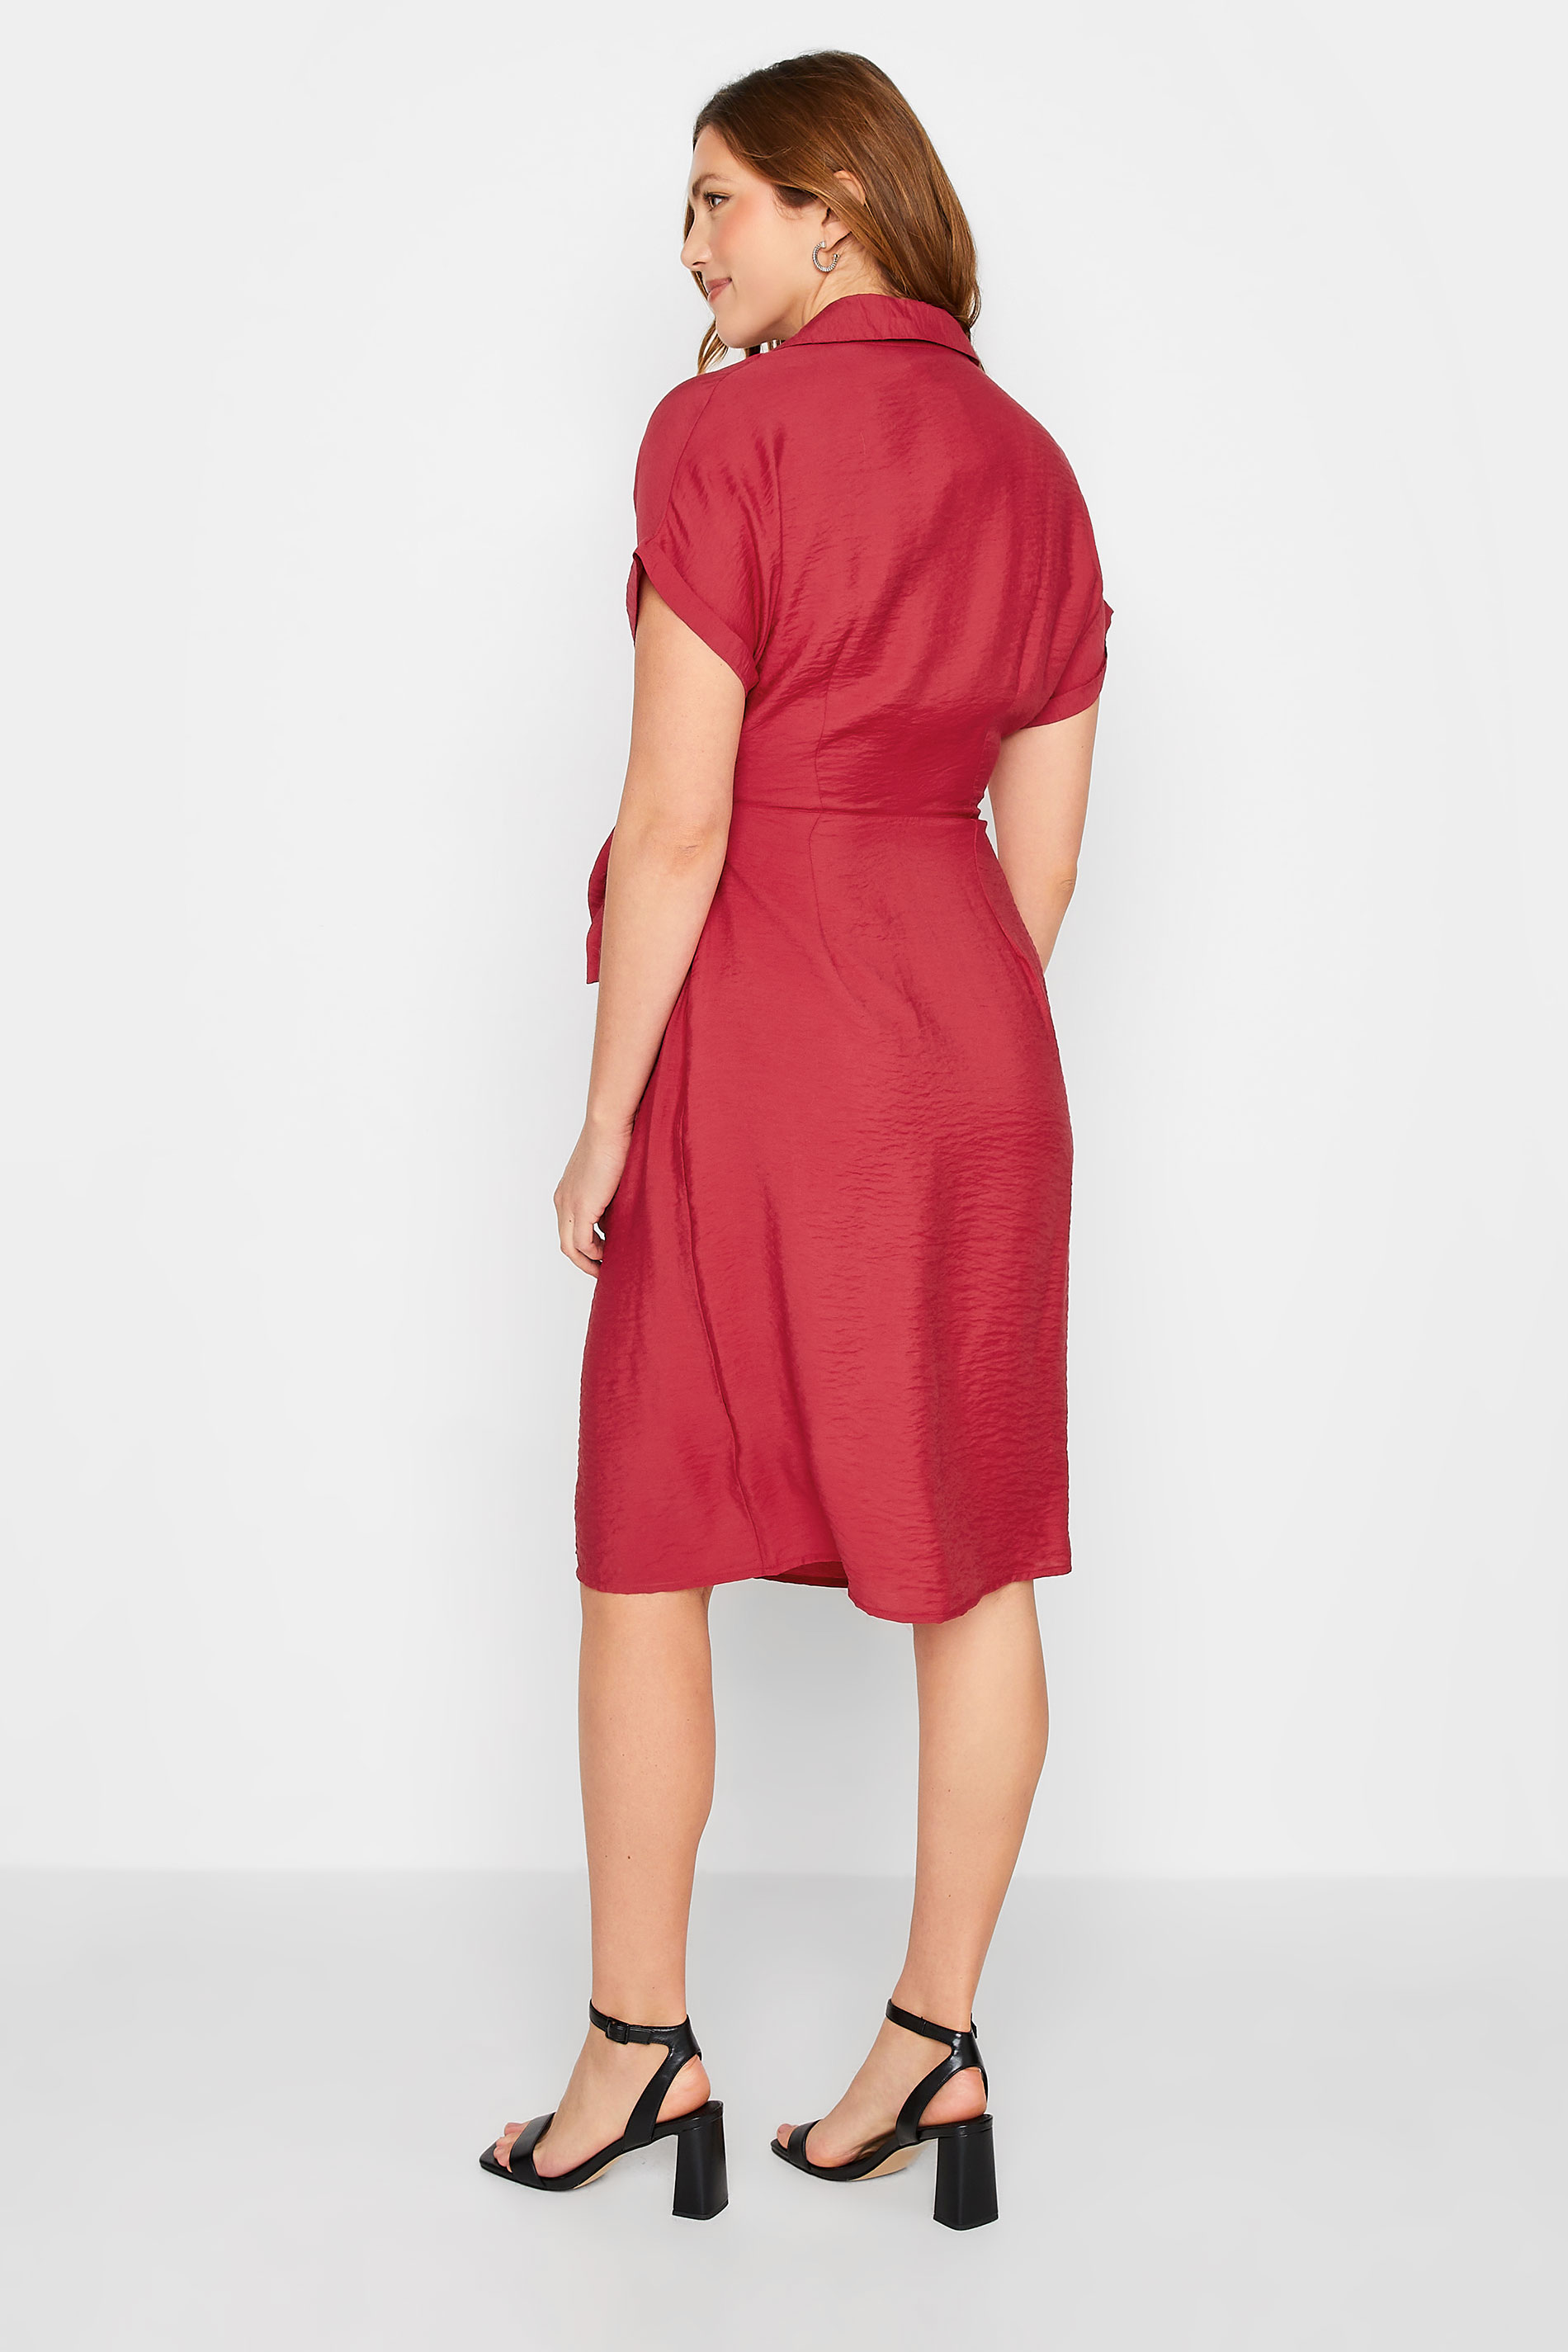 LTS Tall Women's Red Wrap Front Dress | Long Tall Sally 3